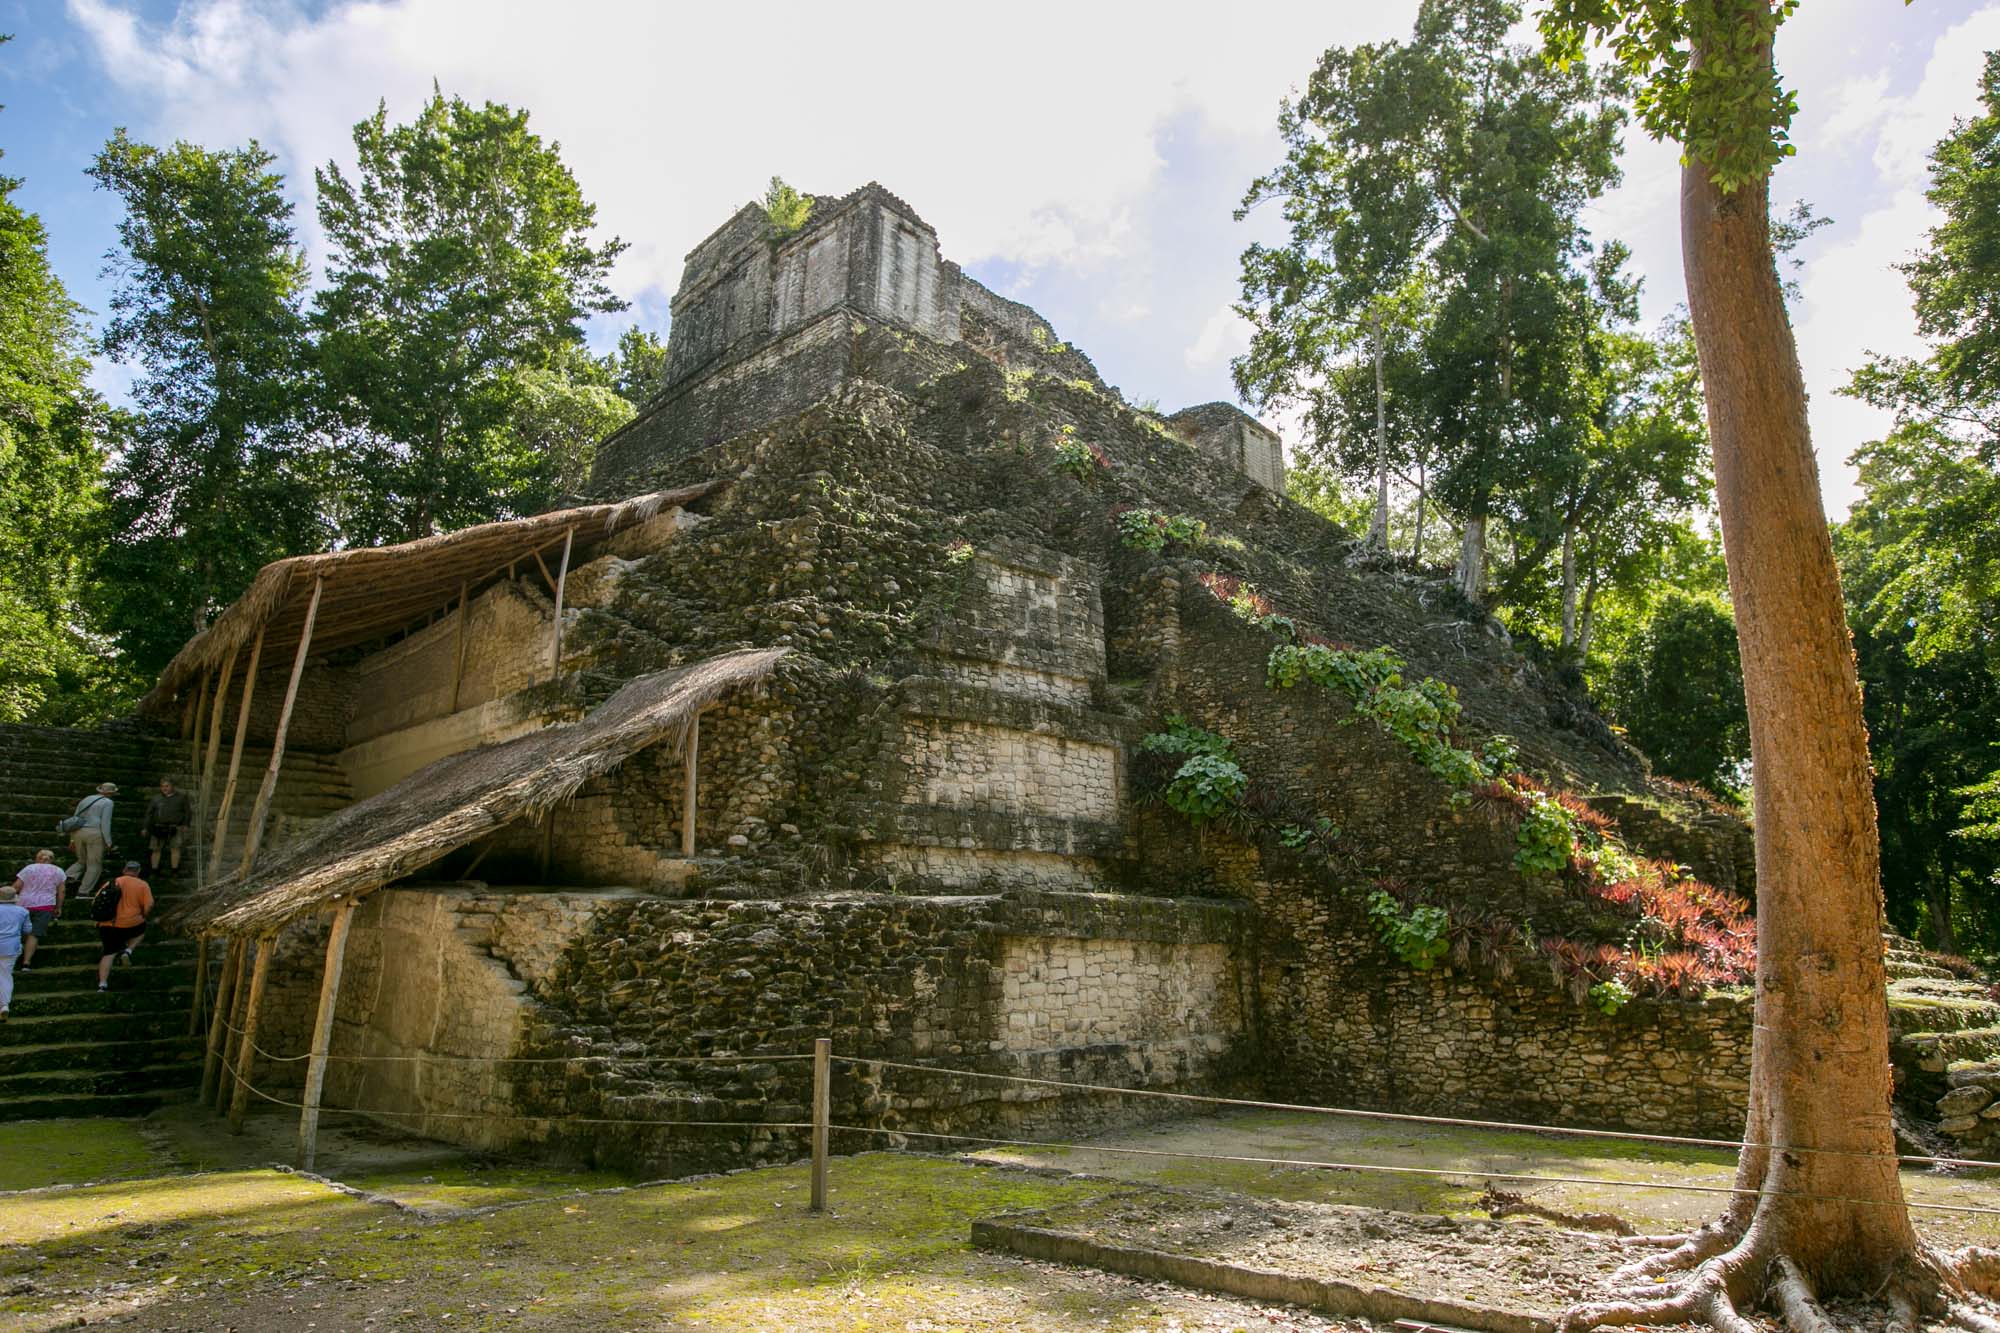 Side view of Edificio 2 at the Mayan ruins of Dzibanche in Mexico